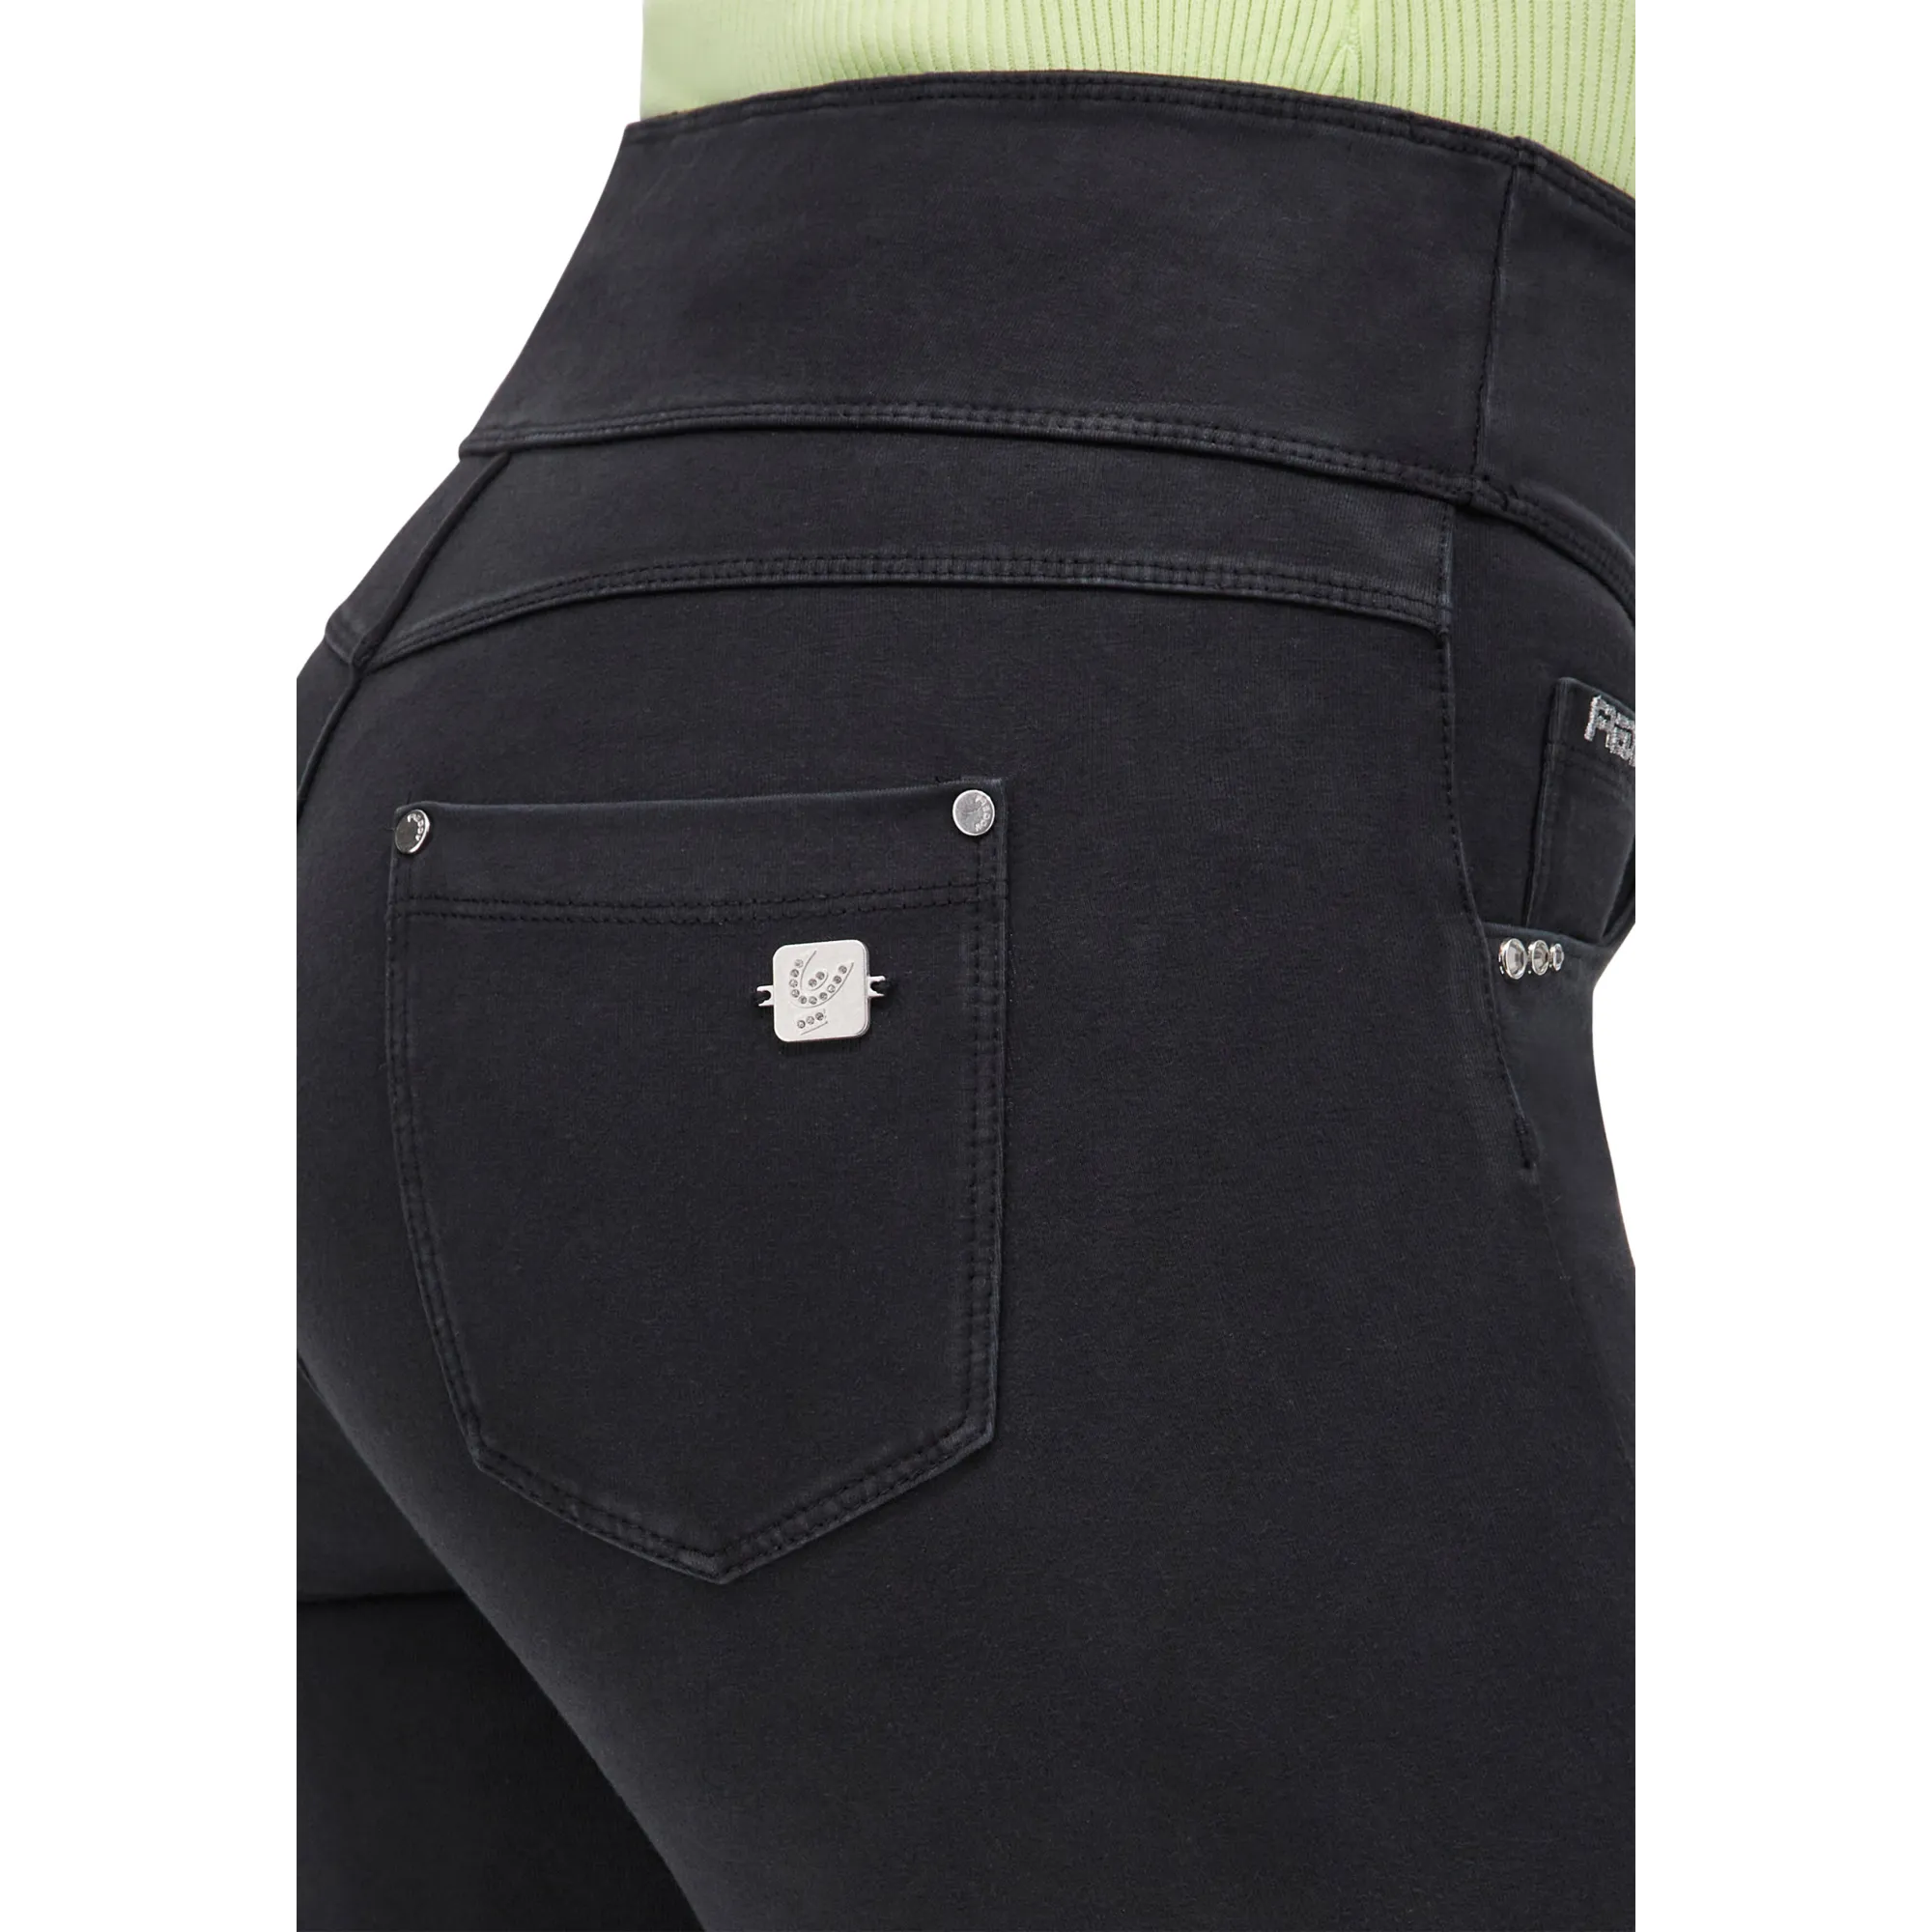 Freddy N.O.W.® Yoga Damen Comfort Hose - Mid Waist Straight - umschlagbarer Taillenbund - Garment Dyed - Schwarz - N0